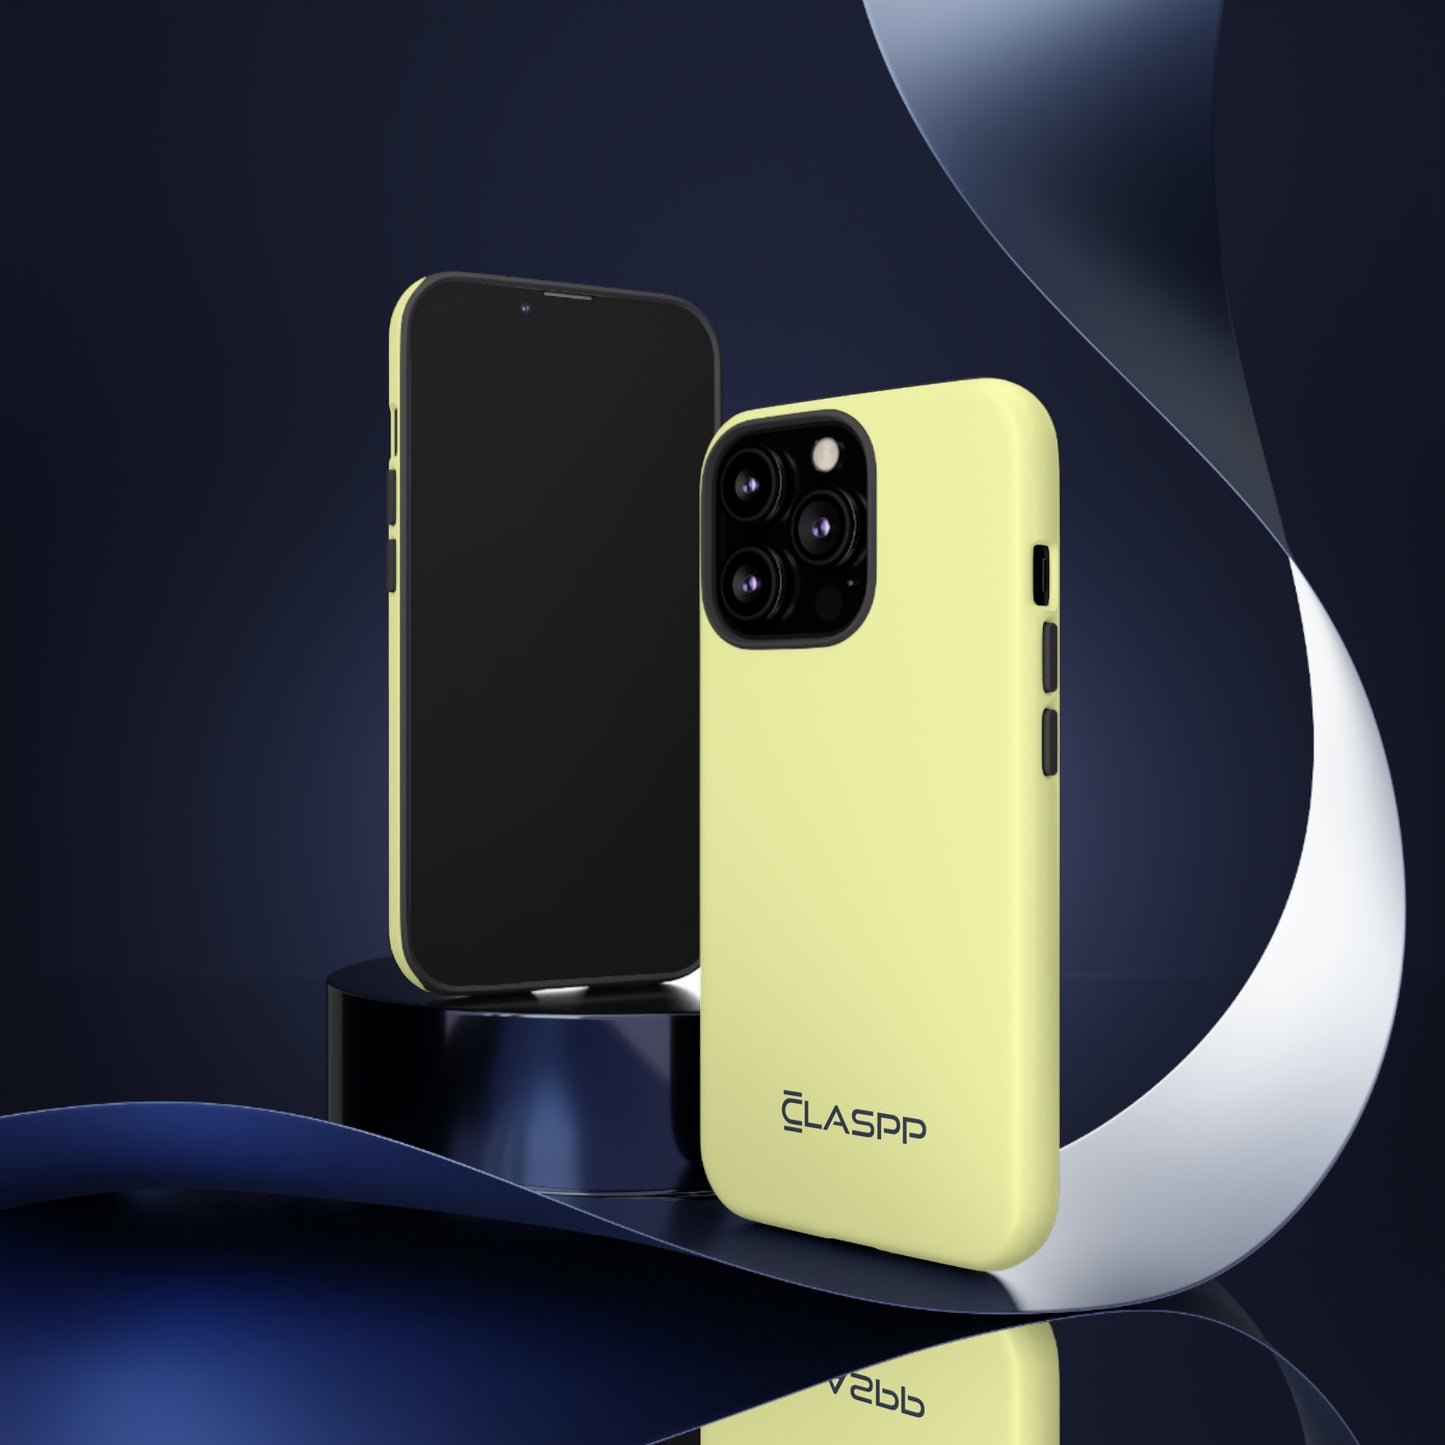 Classic Yellow | Hardshell Dual Layer Phone Case